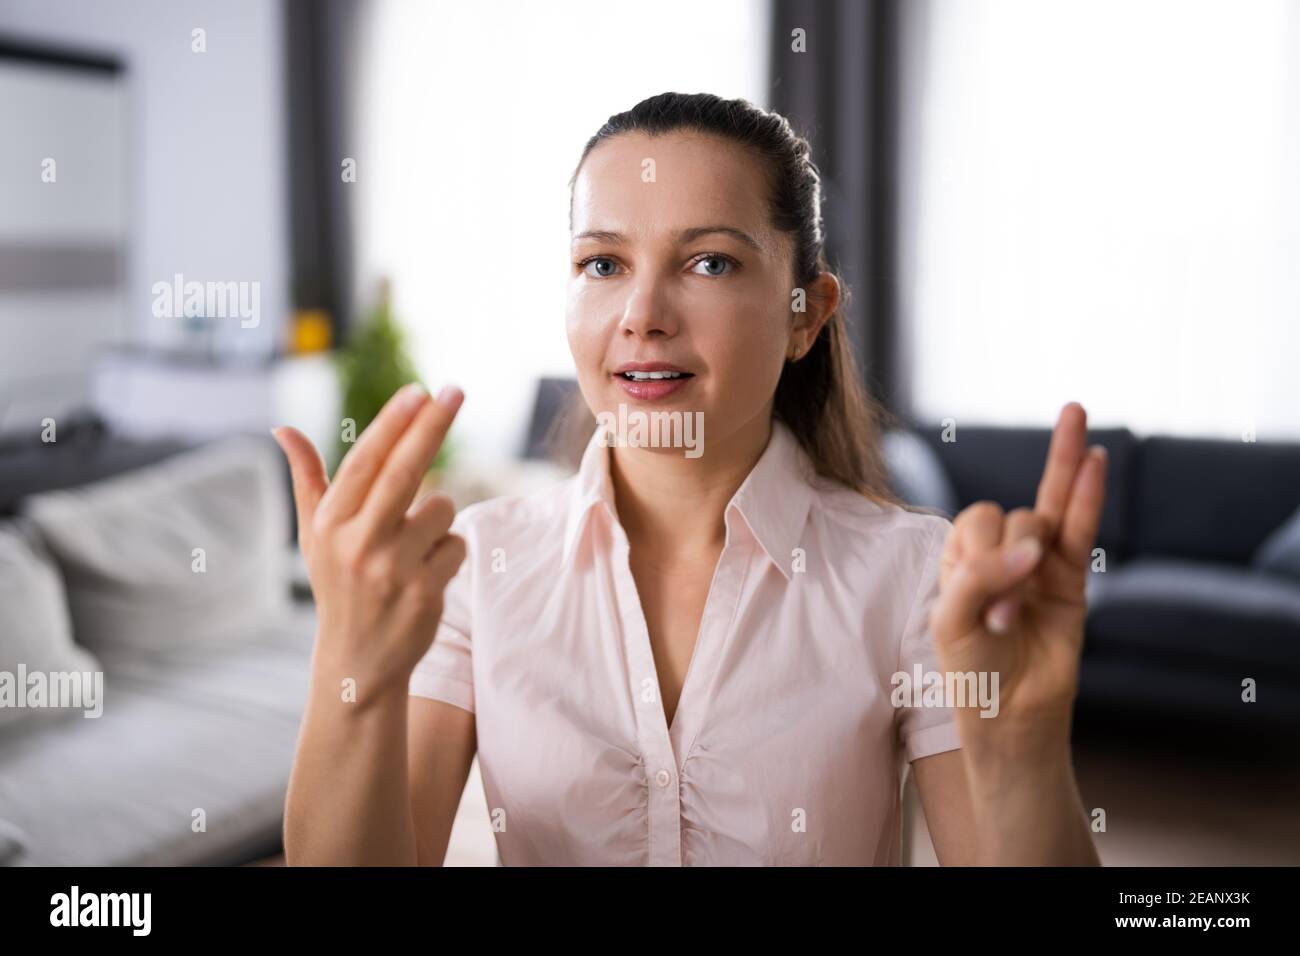 Adult Learning Sign Language Stock Photo